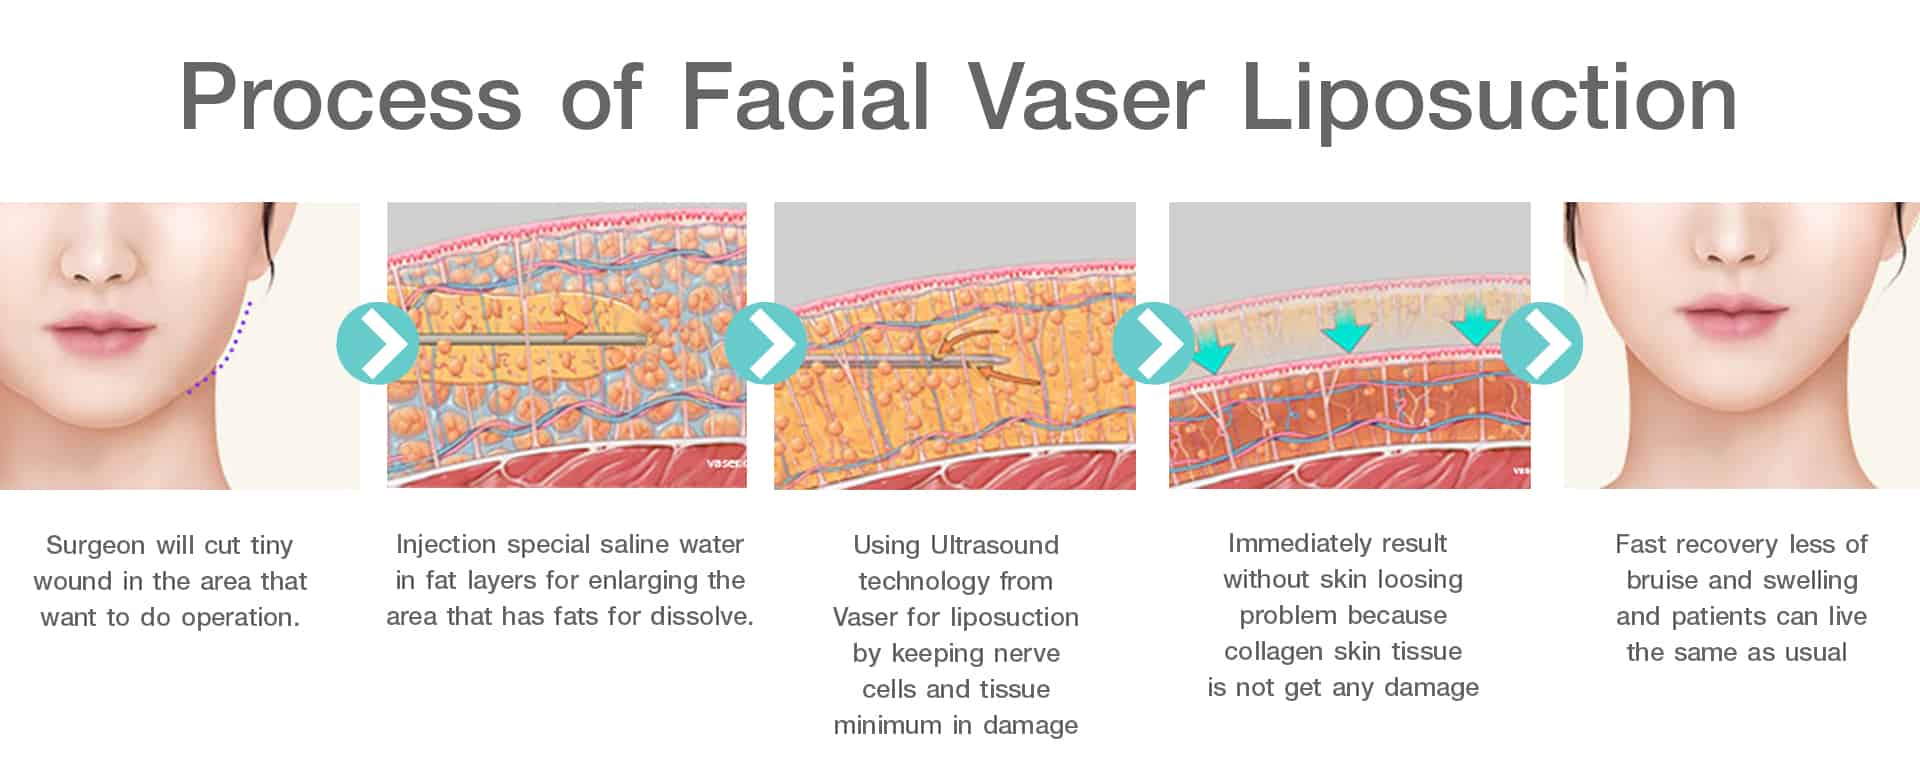 Process of Facial Vaser Liposuction